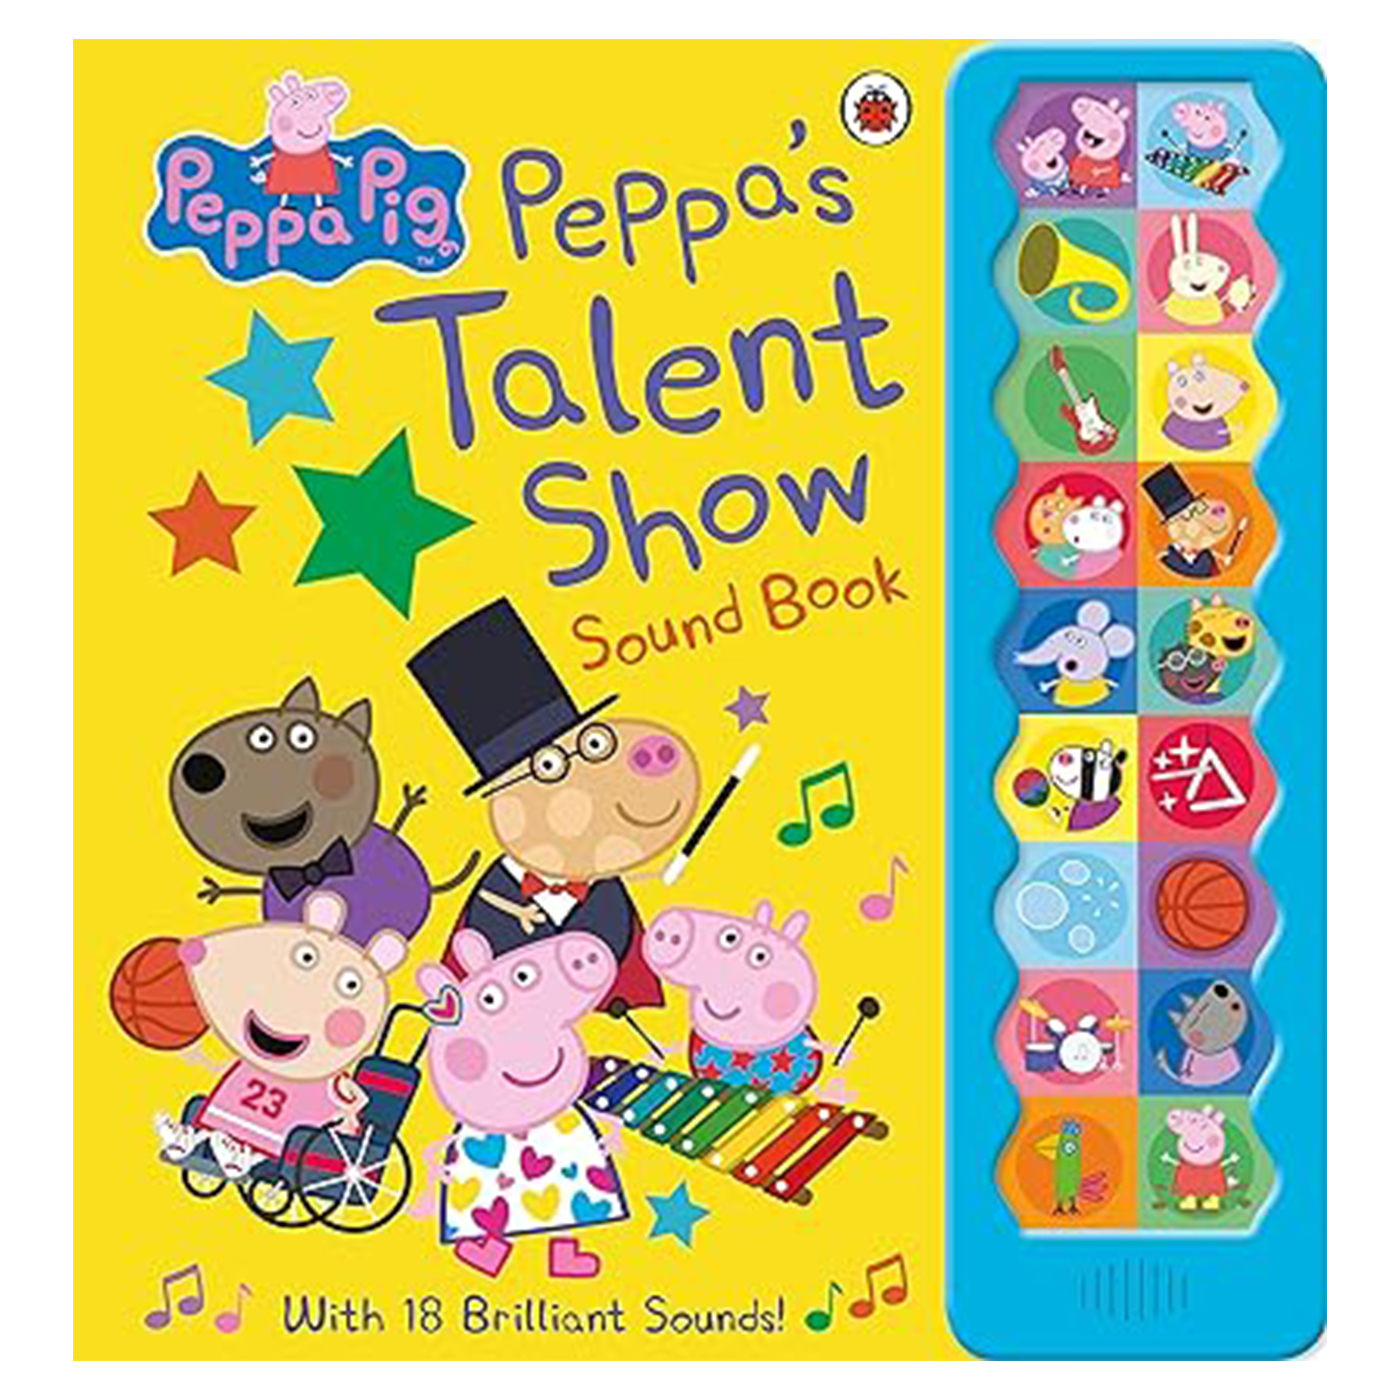 LADYBIRD Peppa Pig Peppa's Talent Show Sound Book